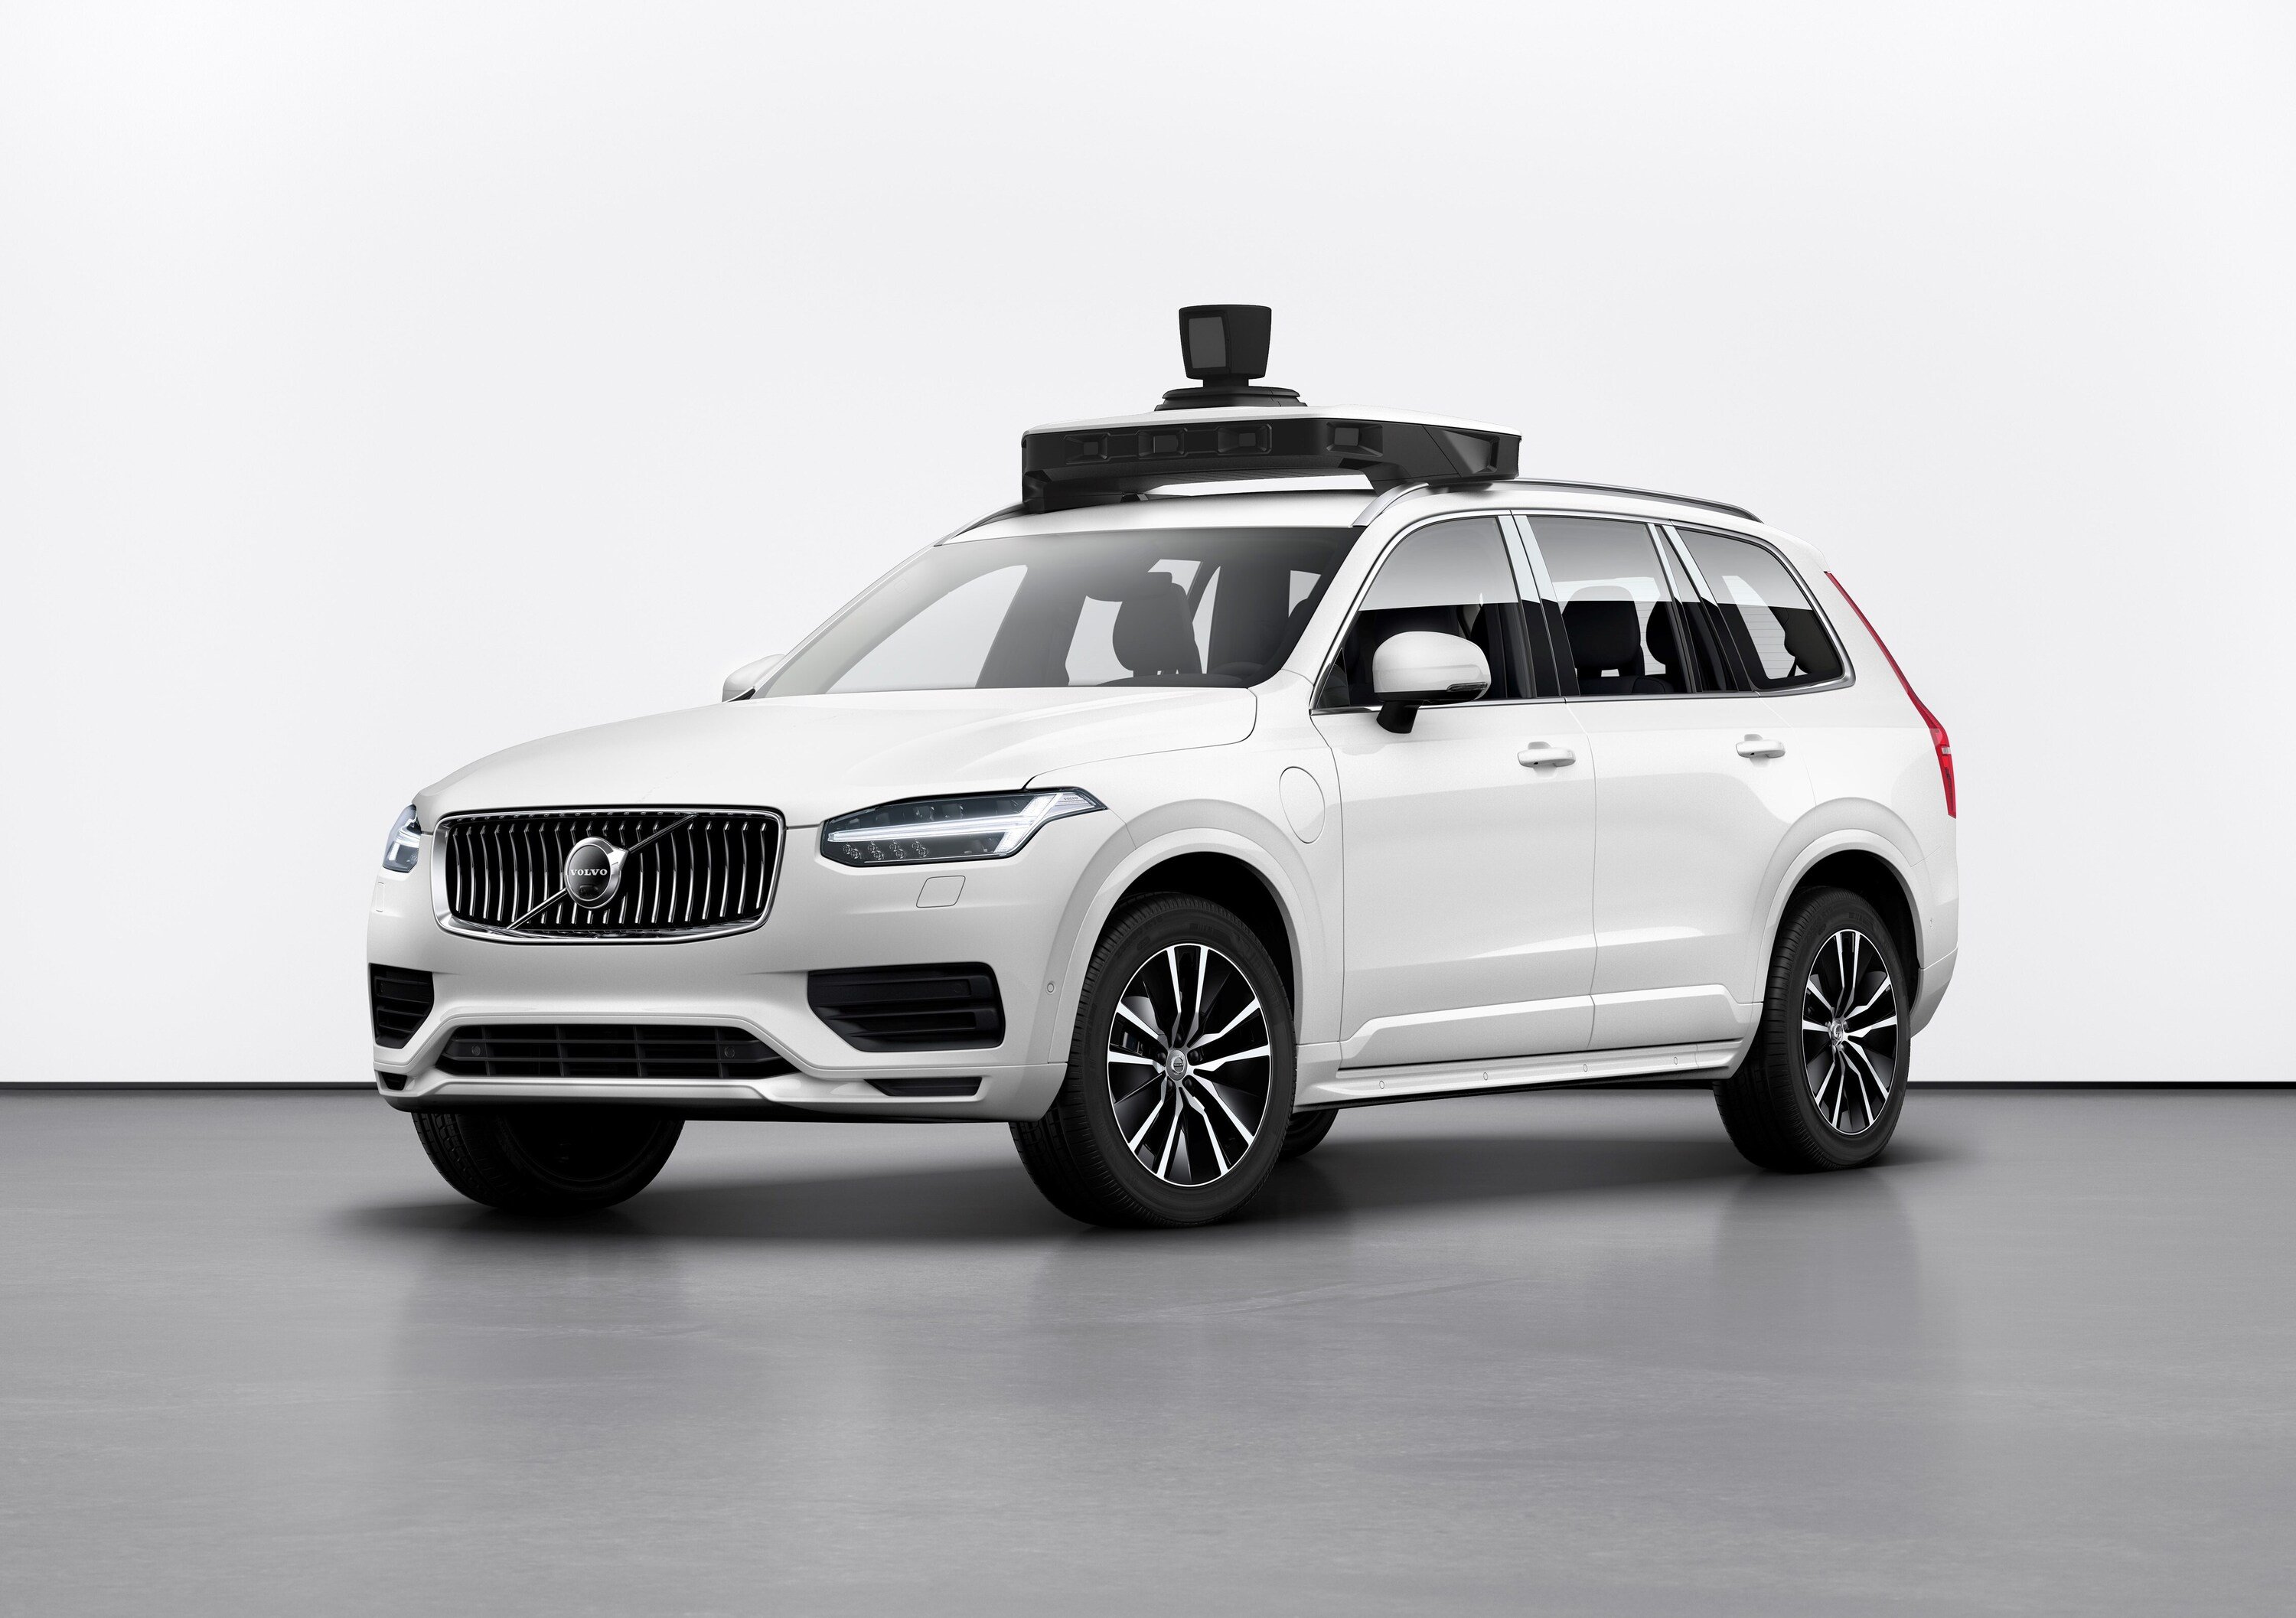 Guida autonoma: accordo Volvo-Waymo